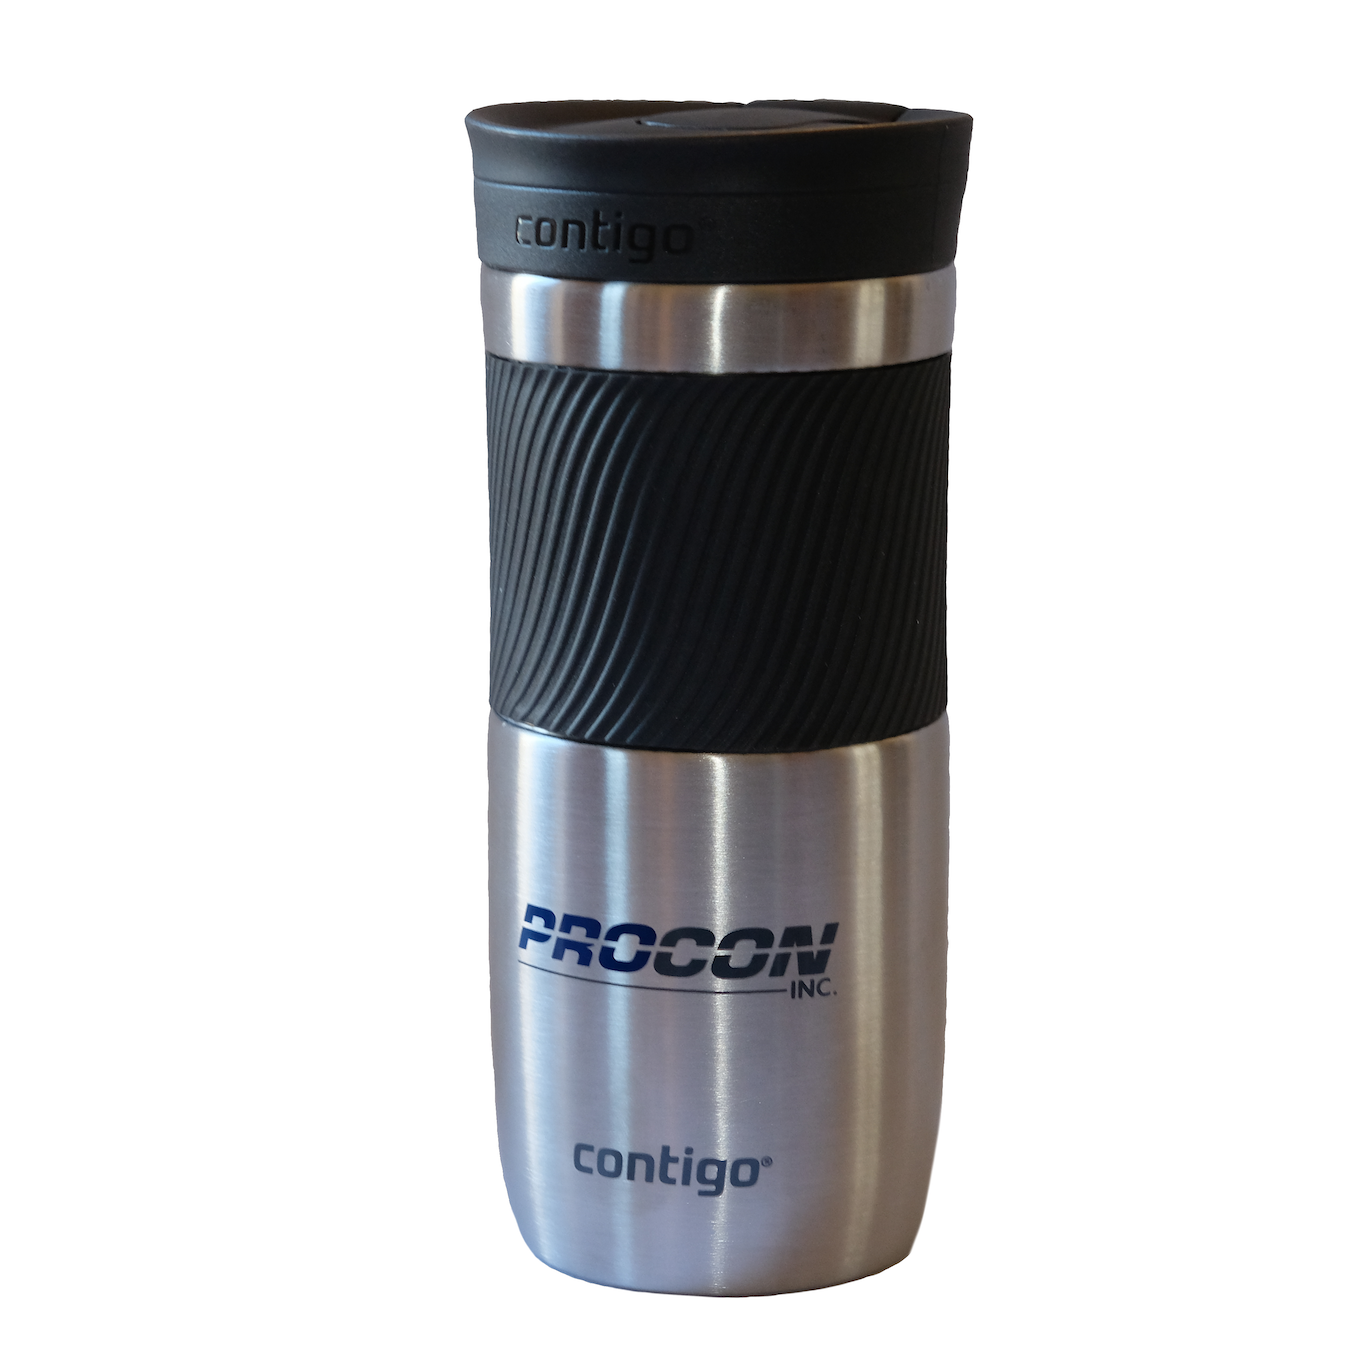 Contigo 20oz Snapseal Insulated Stainless Steel Travel Mug with